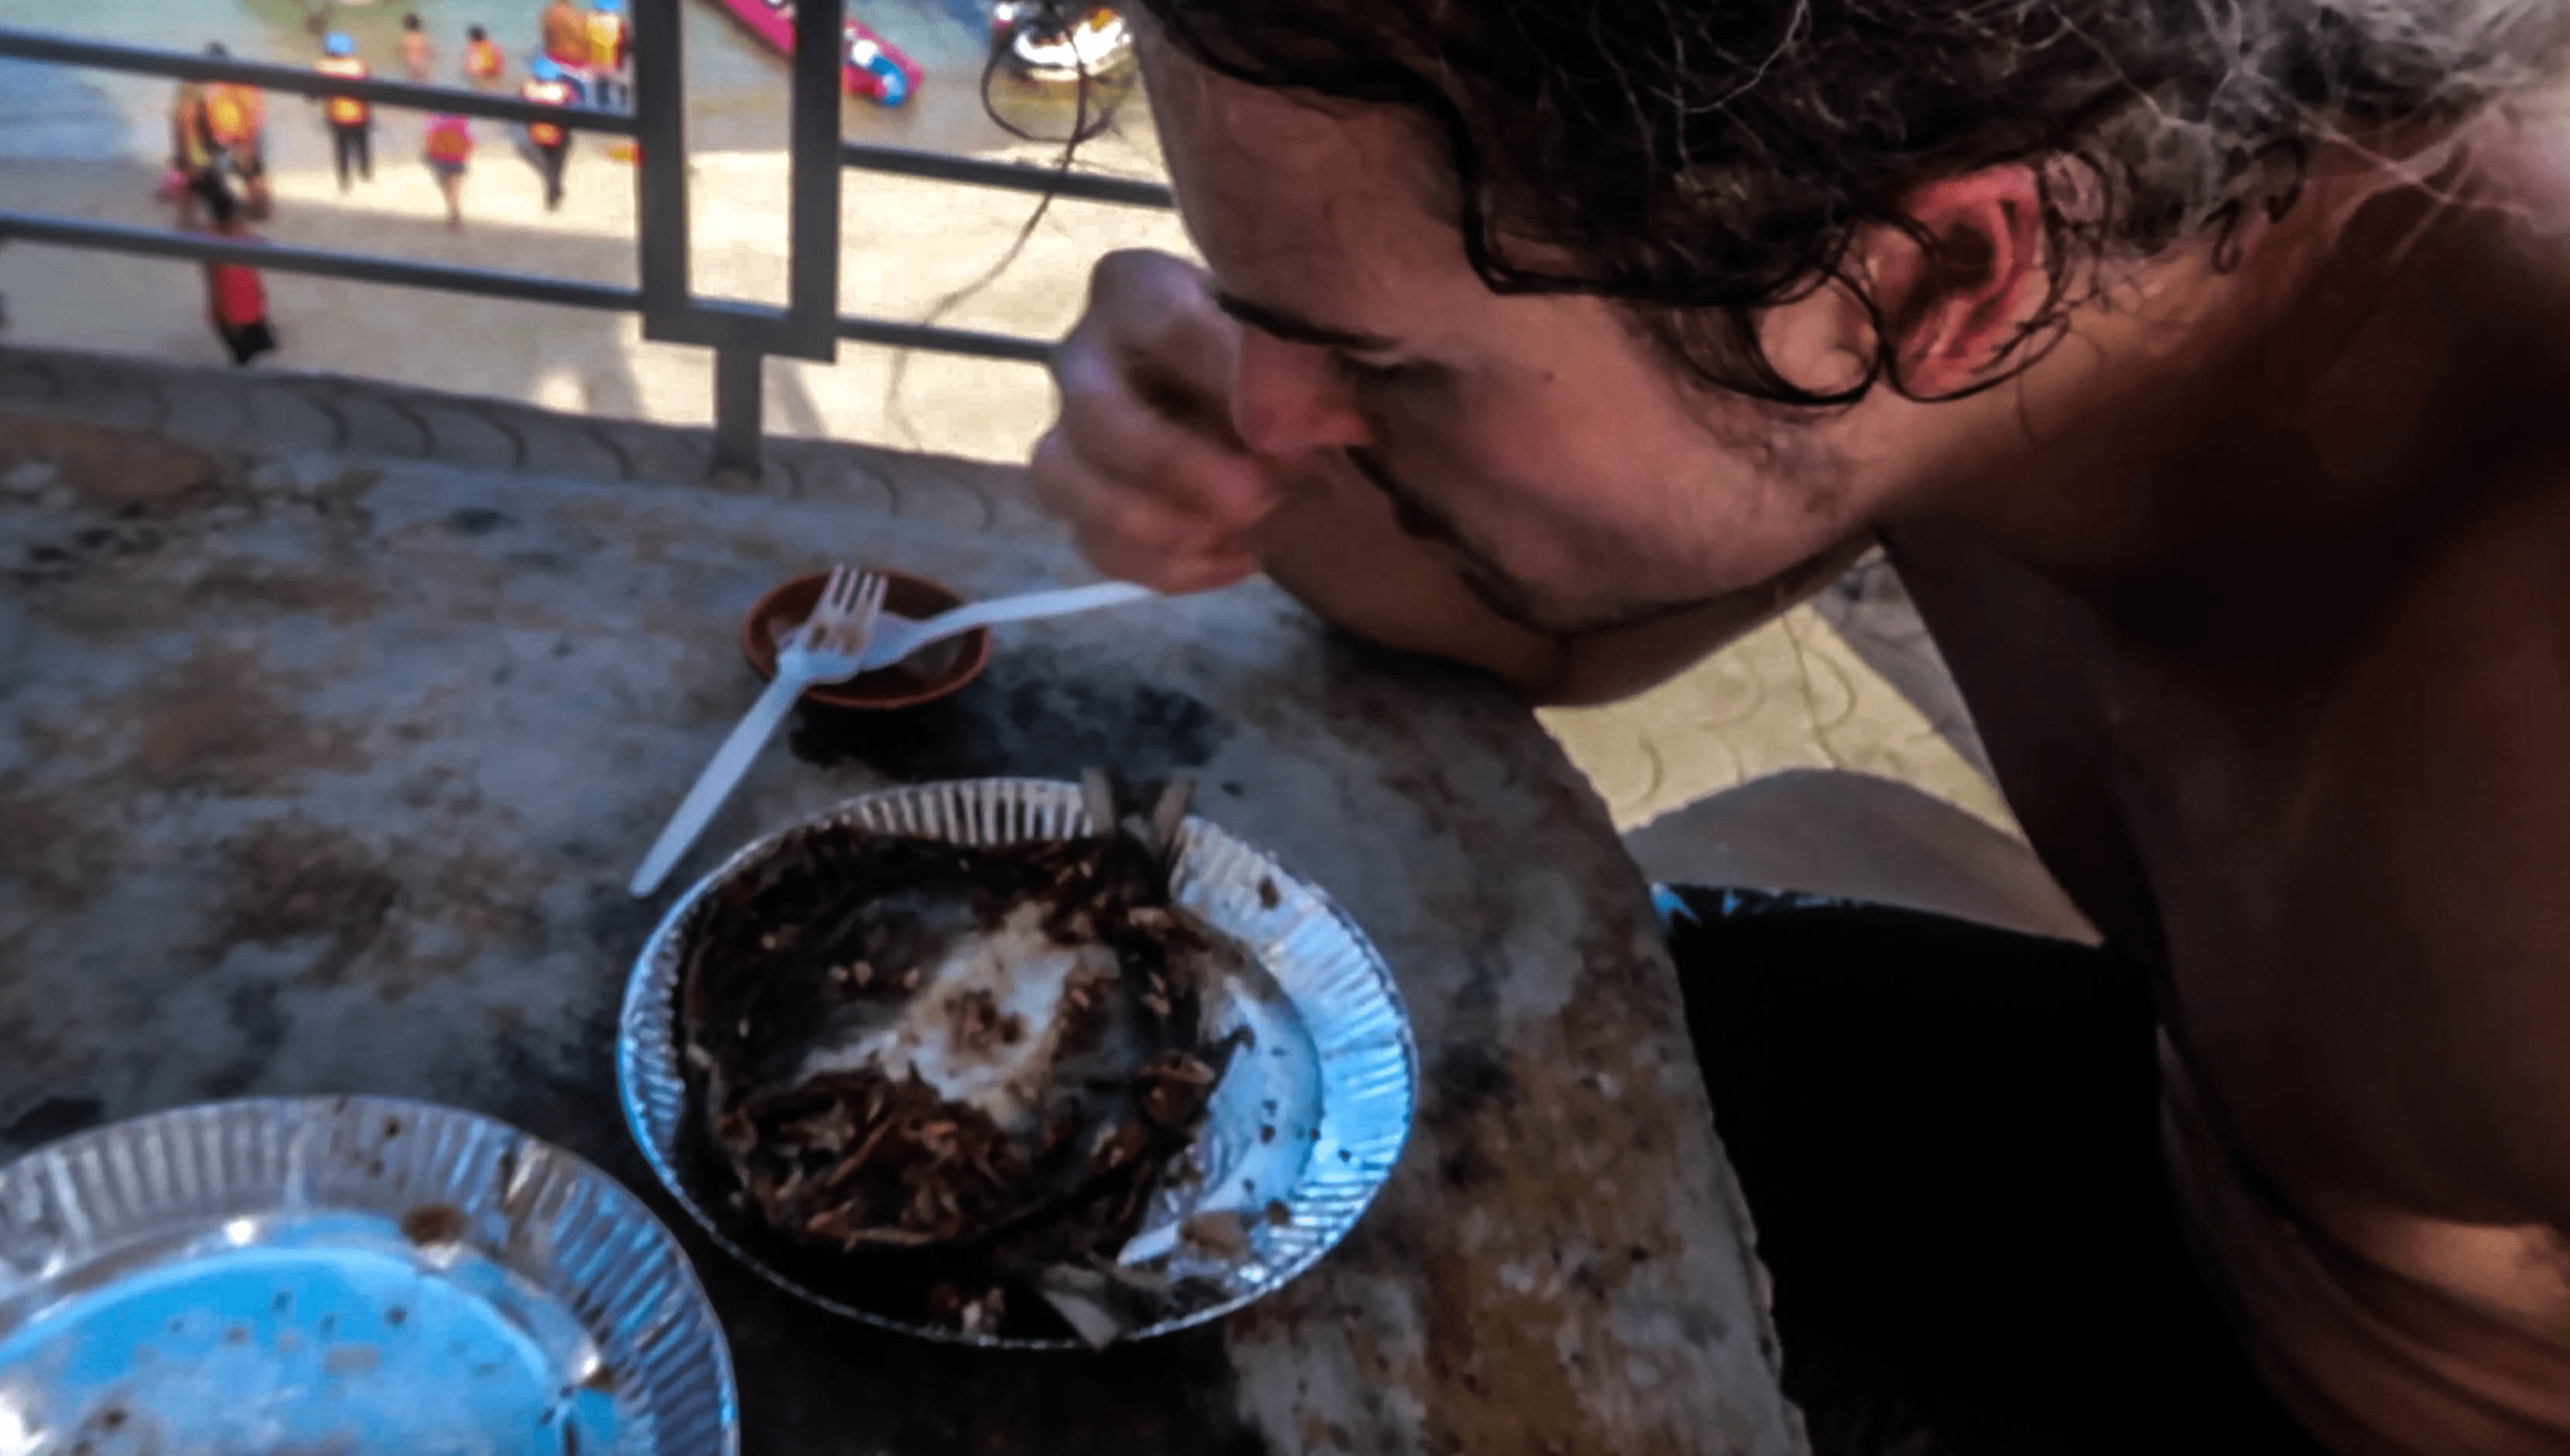 lenny through paradise eating boneluss bangus milfish with his hands filipino style